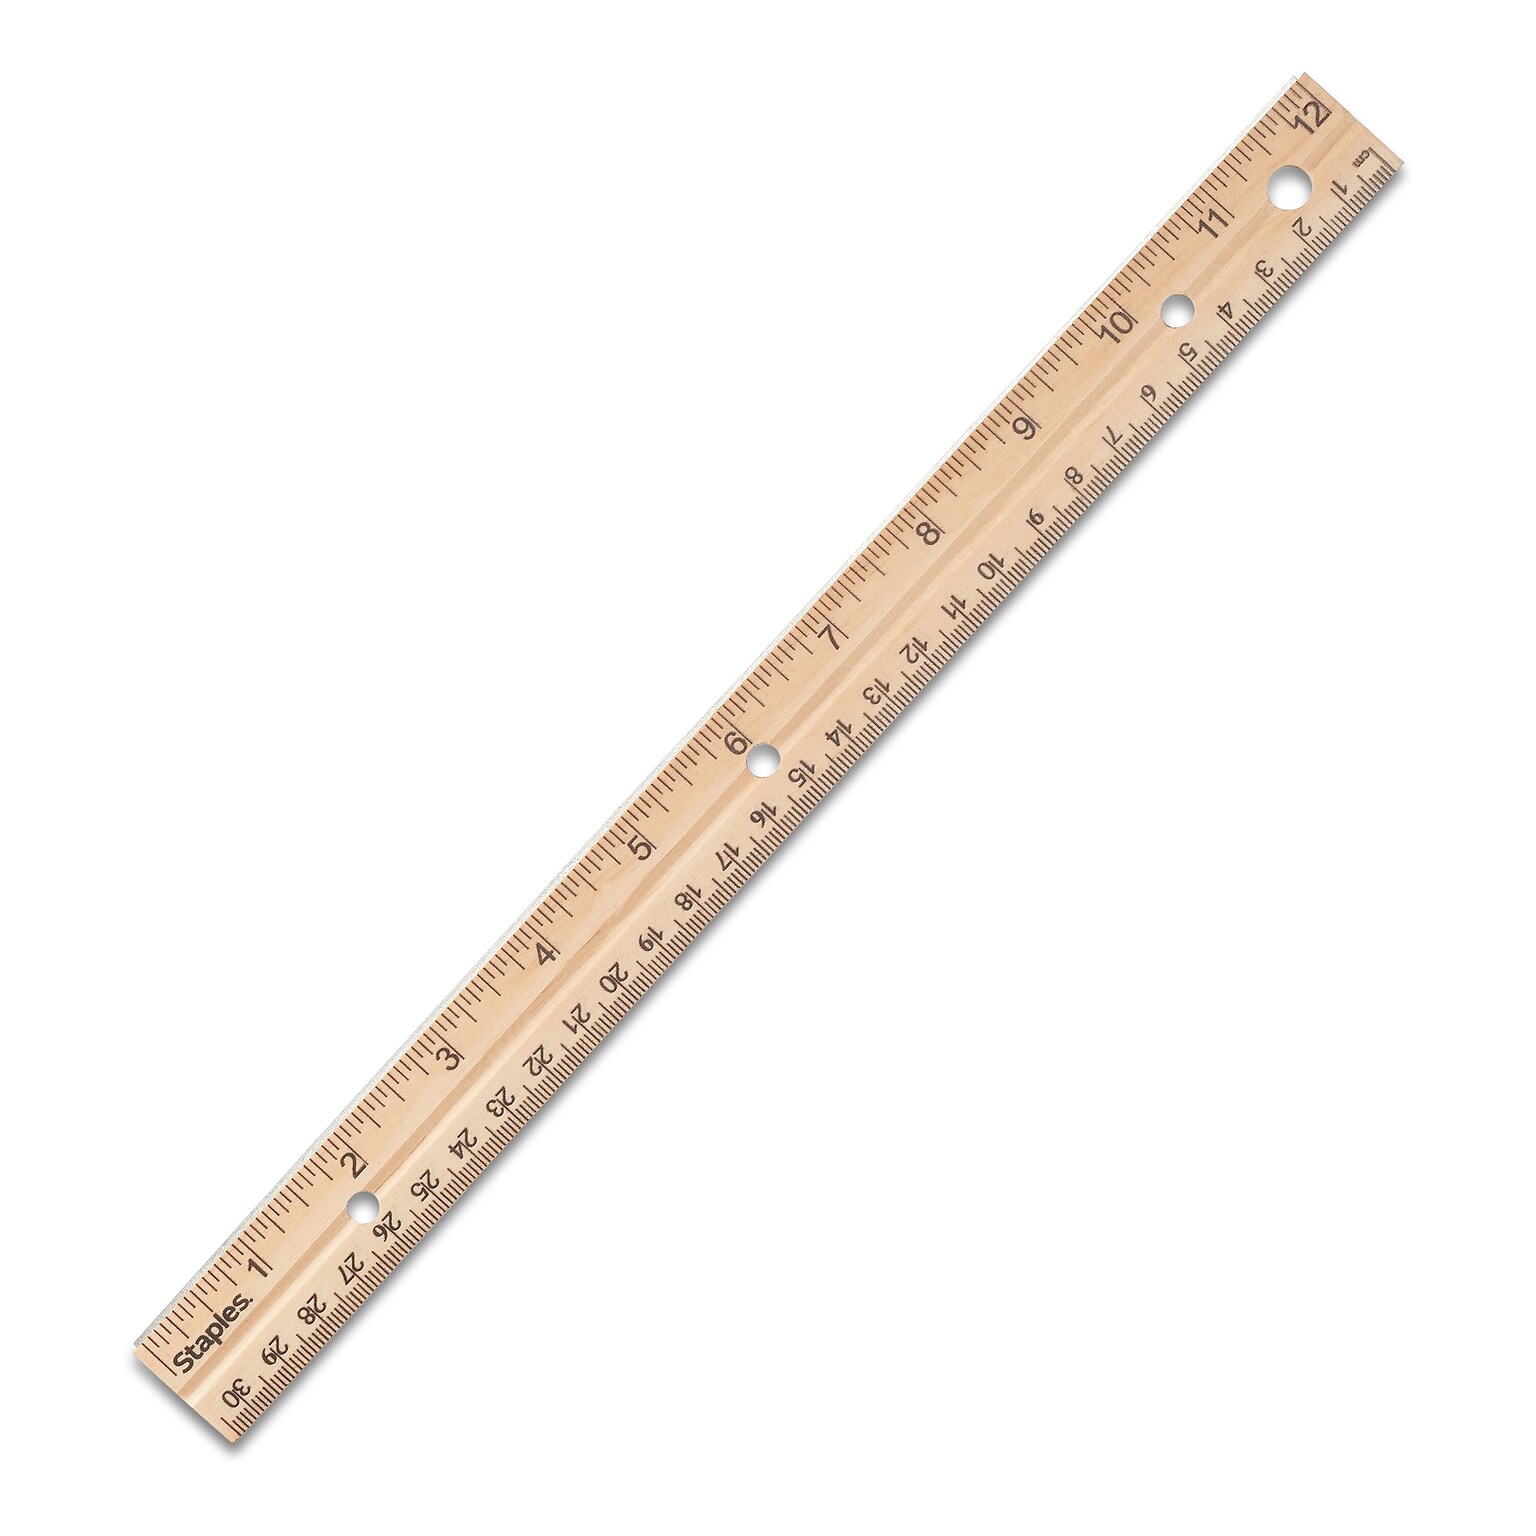 Staples 12 Wooden Imperial/Metric Ruler (51891)